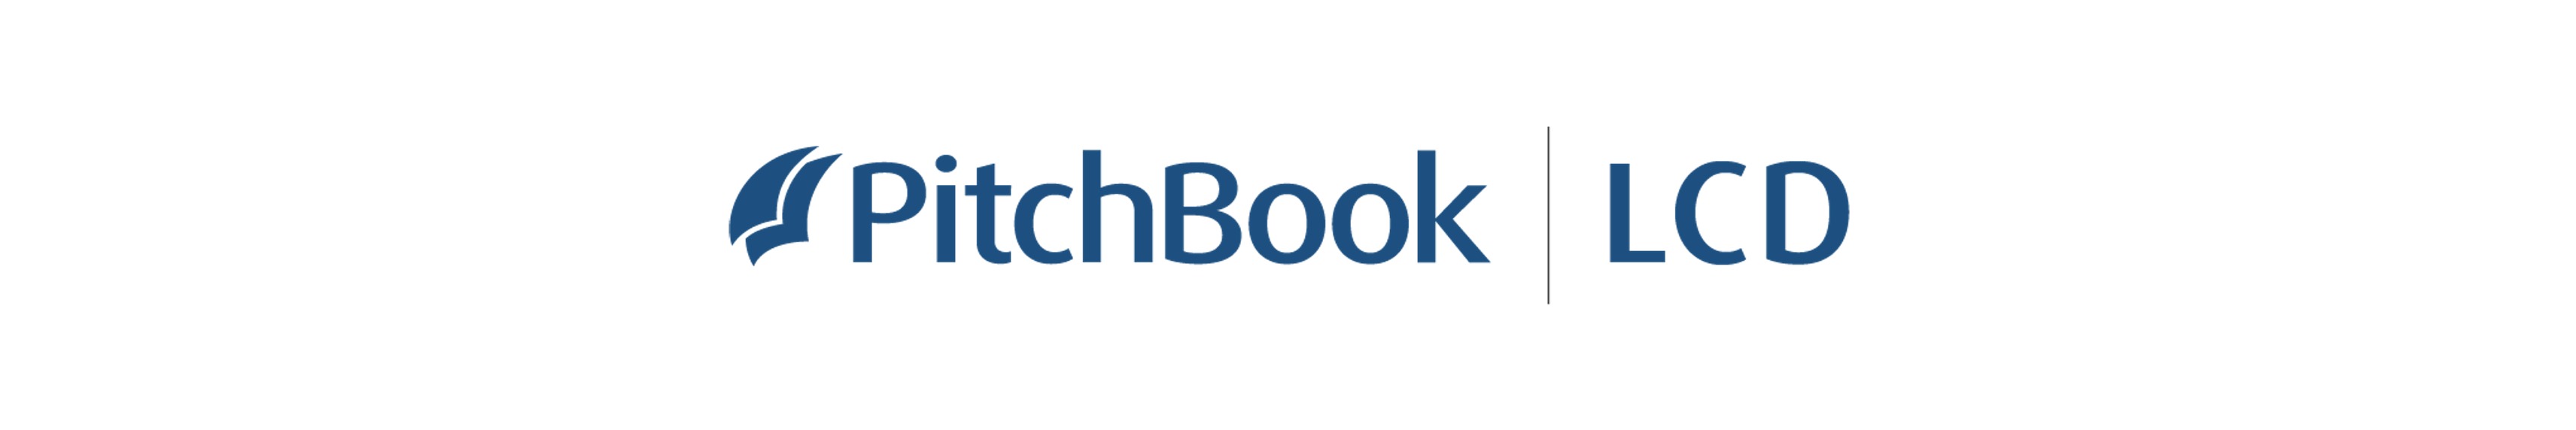 PitchbookLCD-Logo-for-newsletter image